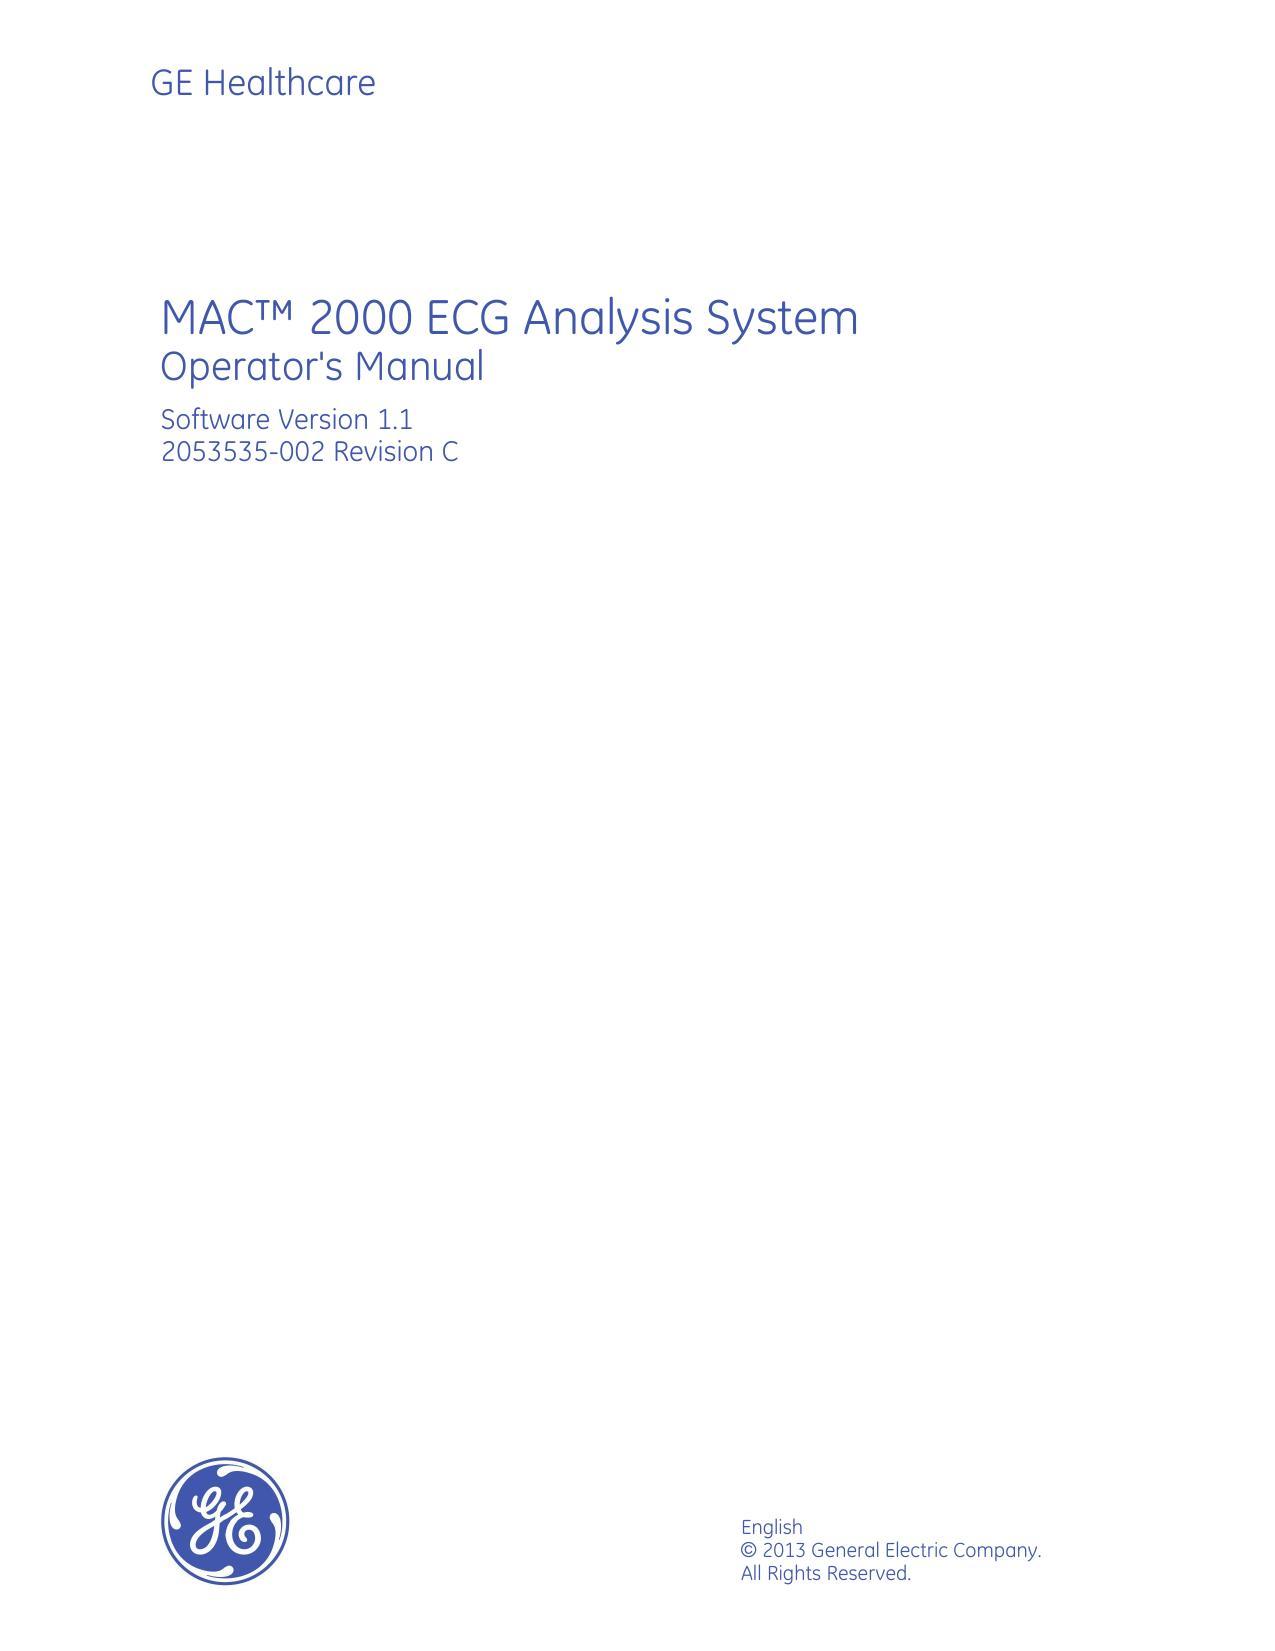 mac-2000-ecg-analysis-system-operators-manual-software-version-11.pdf